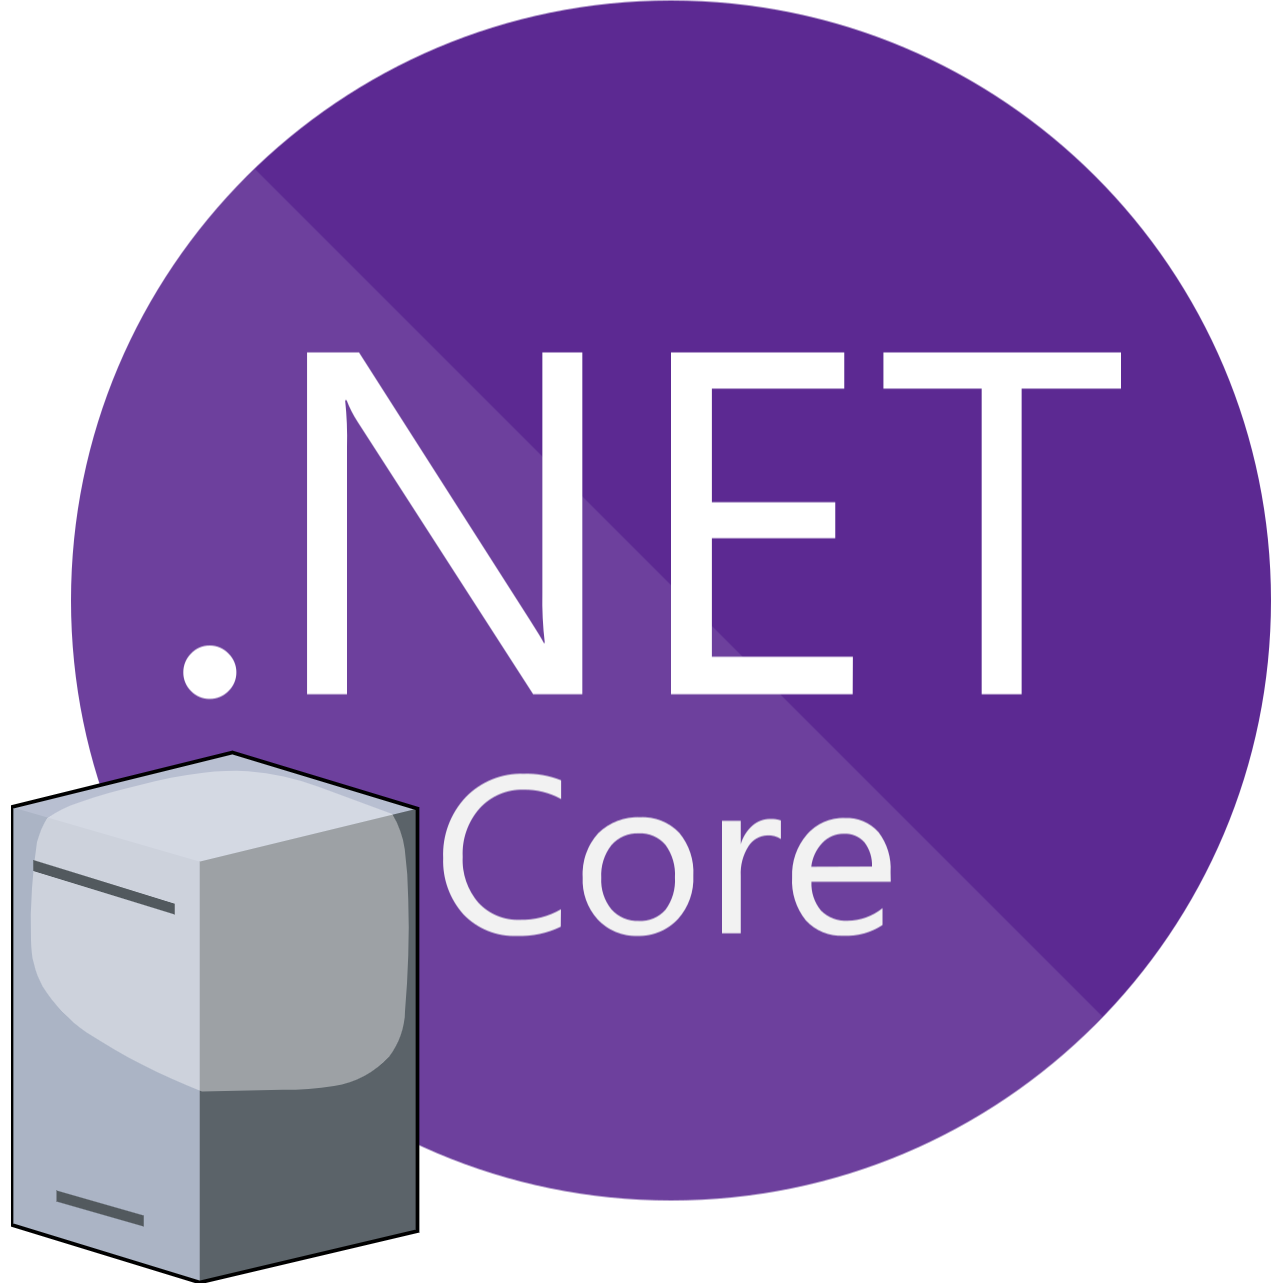 Net core host. Dot net Core. .Net Core 6.0. Net Core 3.1. Net 6.0 desktop runtime.